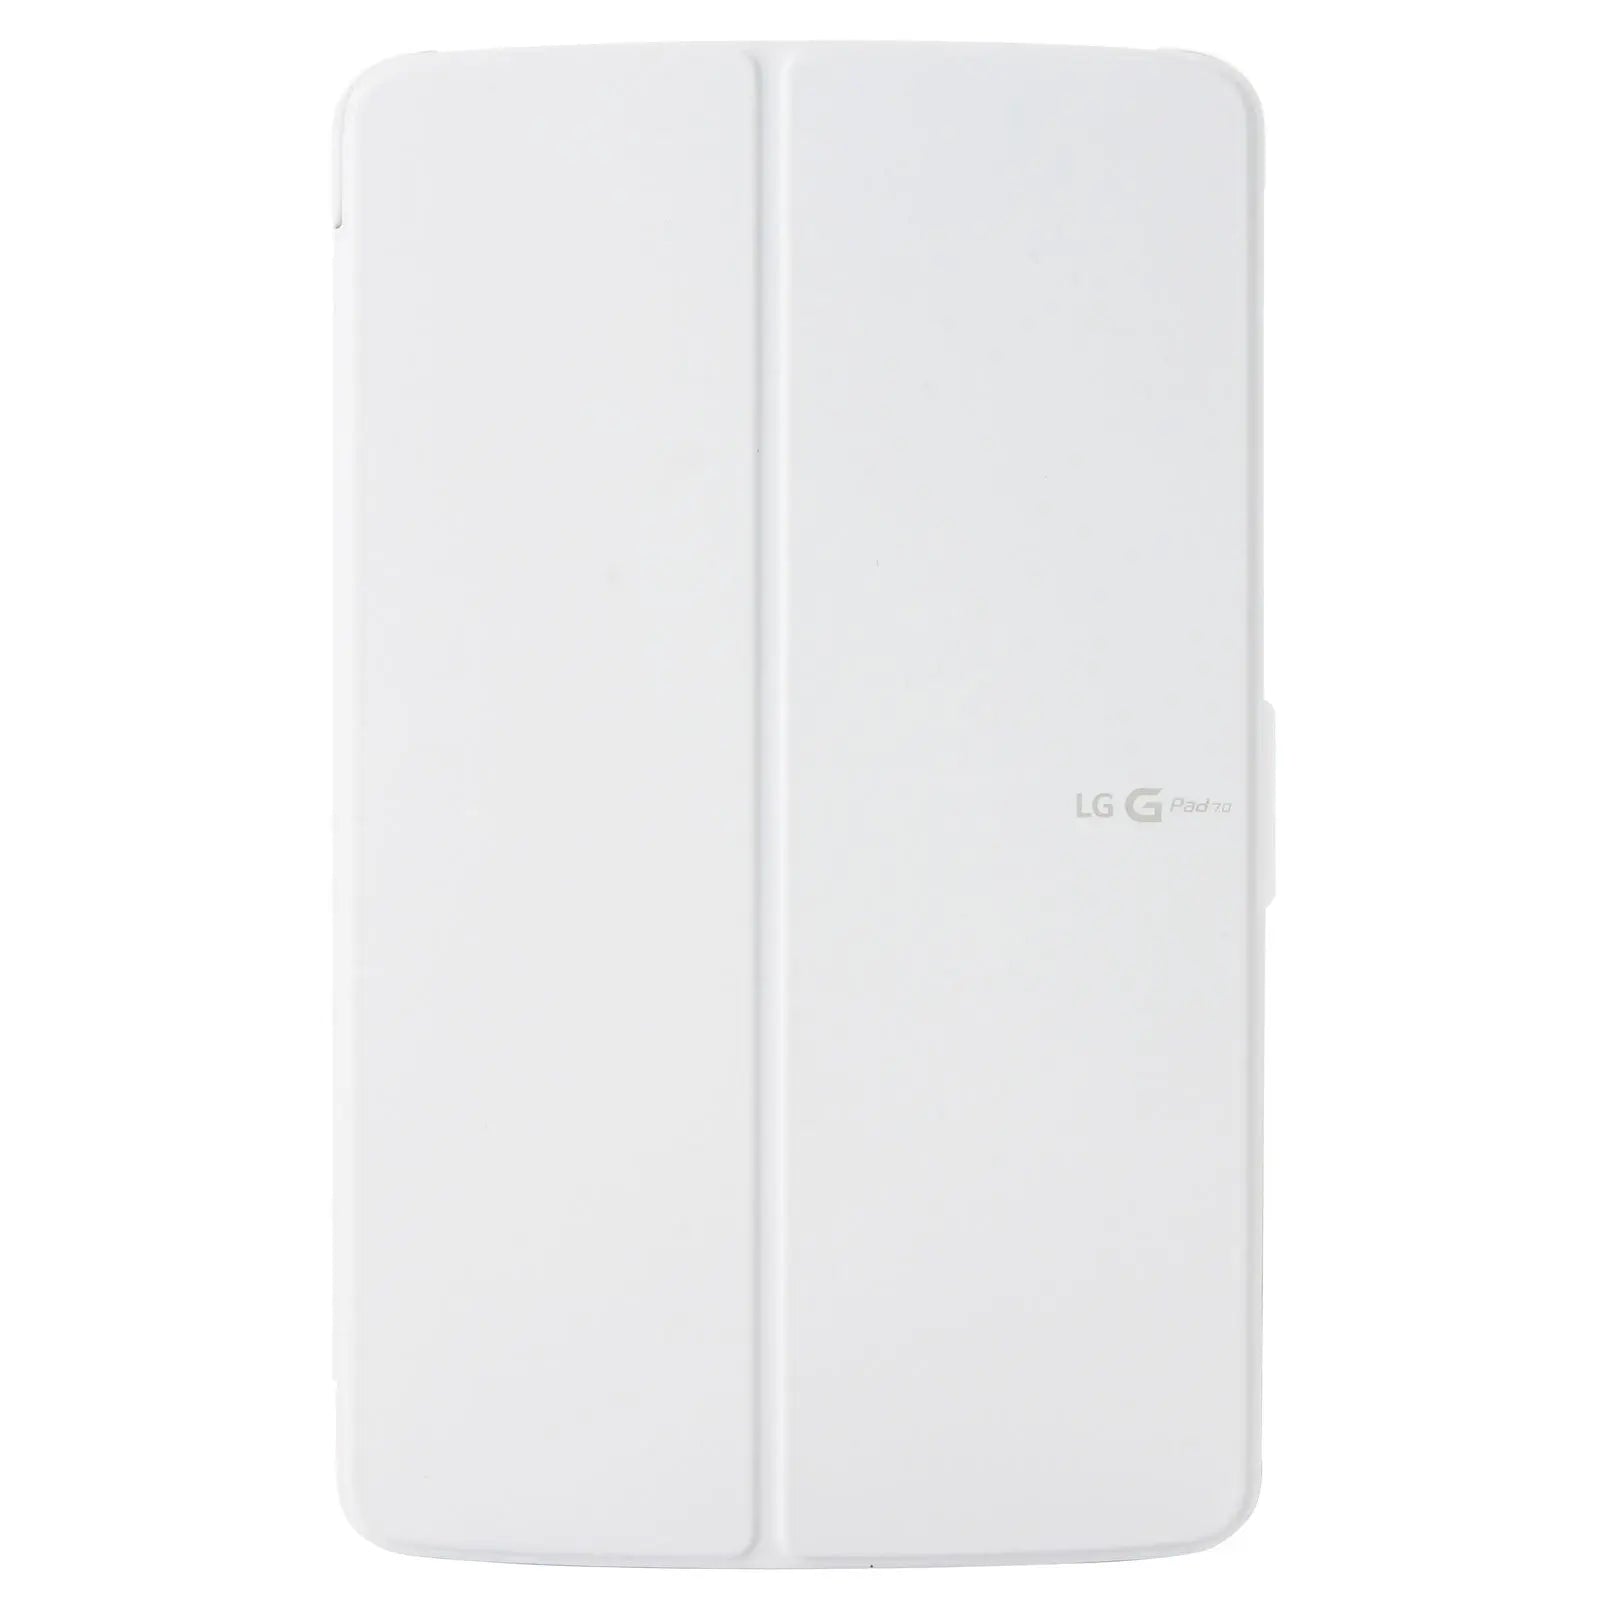 LG Quick Cover Folio Case Blanc pour LG G Pad 7" LG